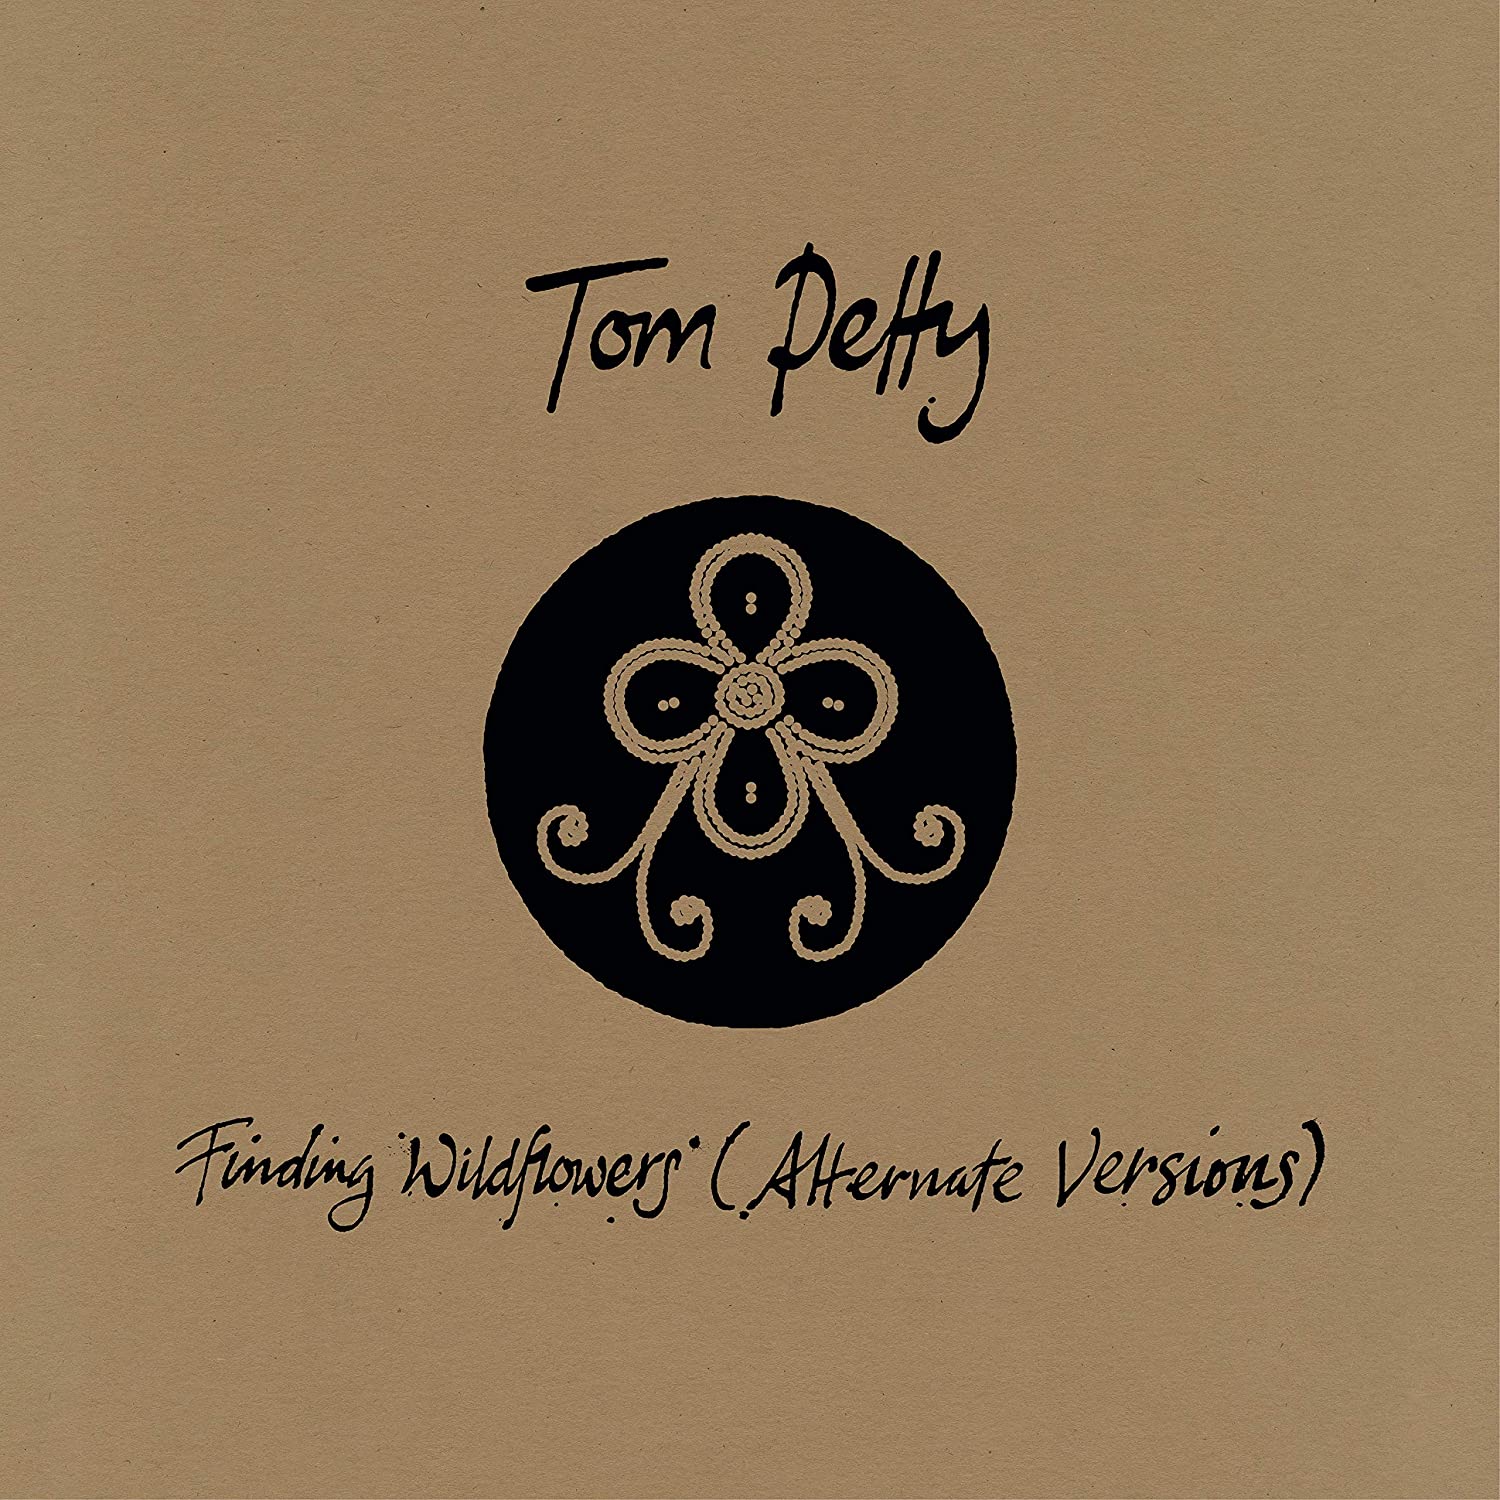 Tom Petty / Finding Wildflowers (Alternate Versions)